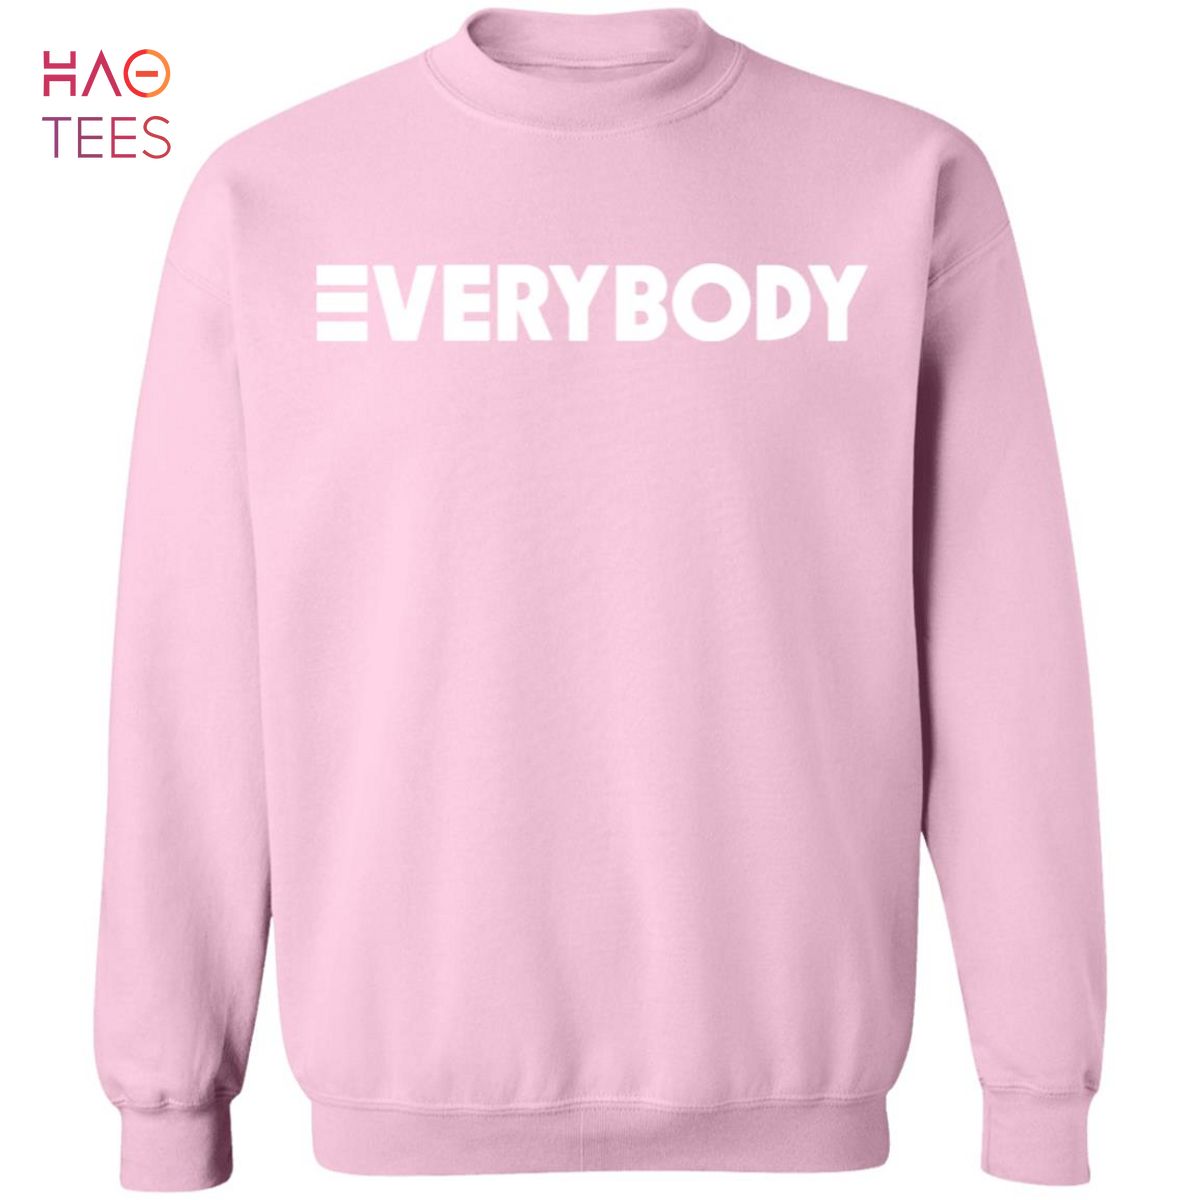 HOT Everybody Logic Sweater